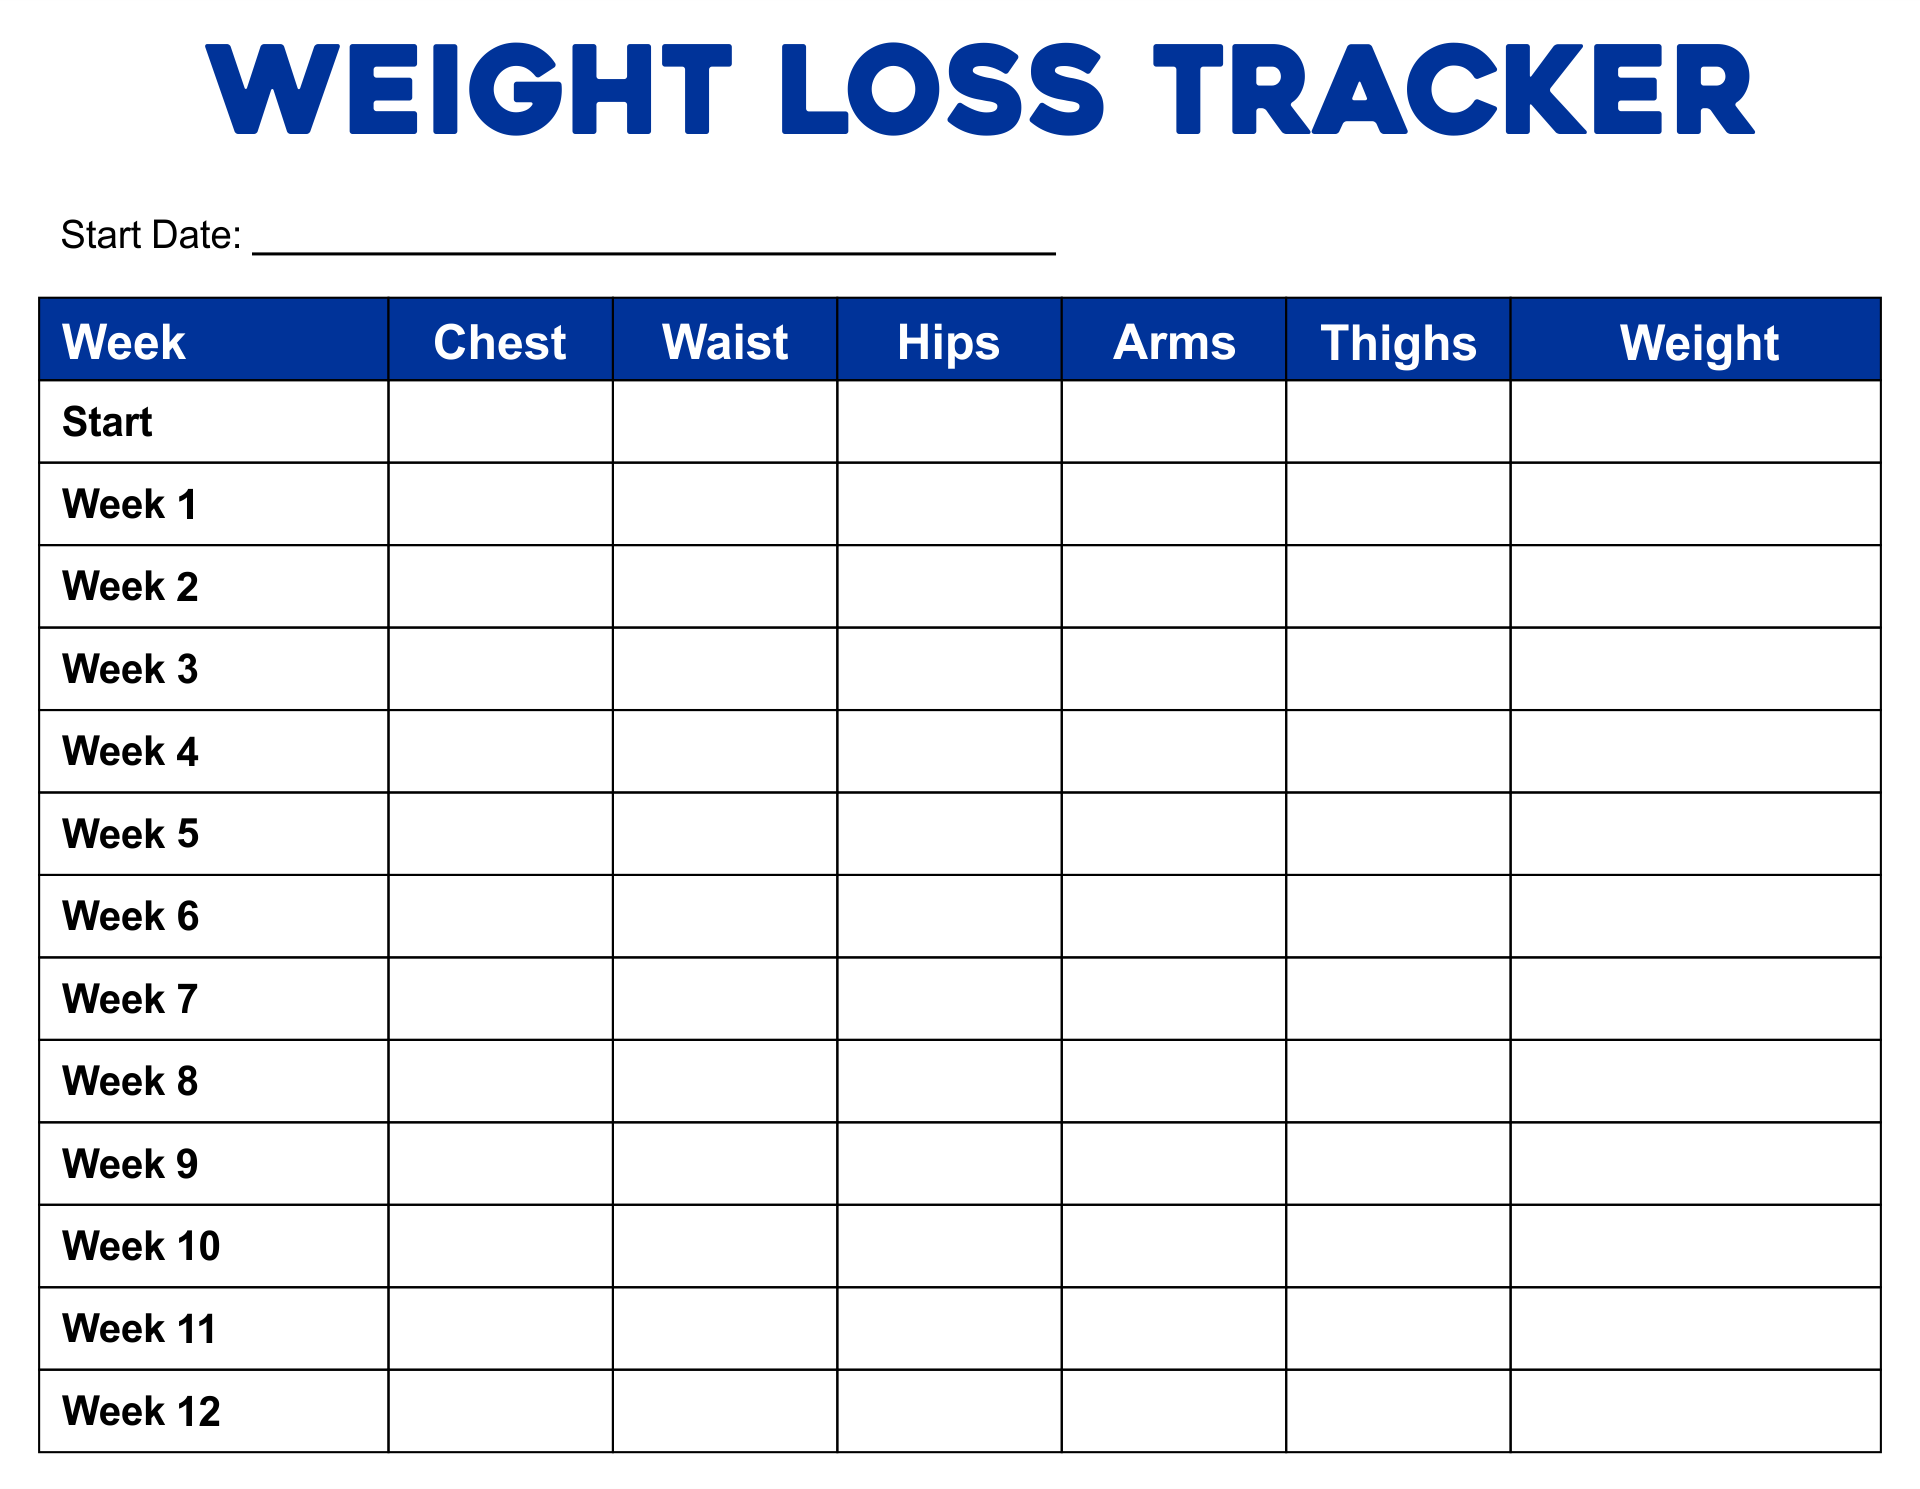 Weight tracker template quietbinger